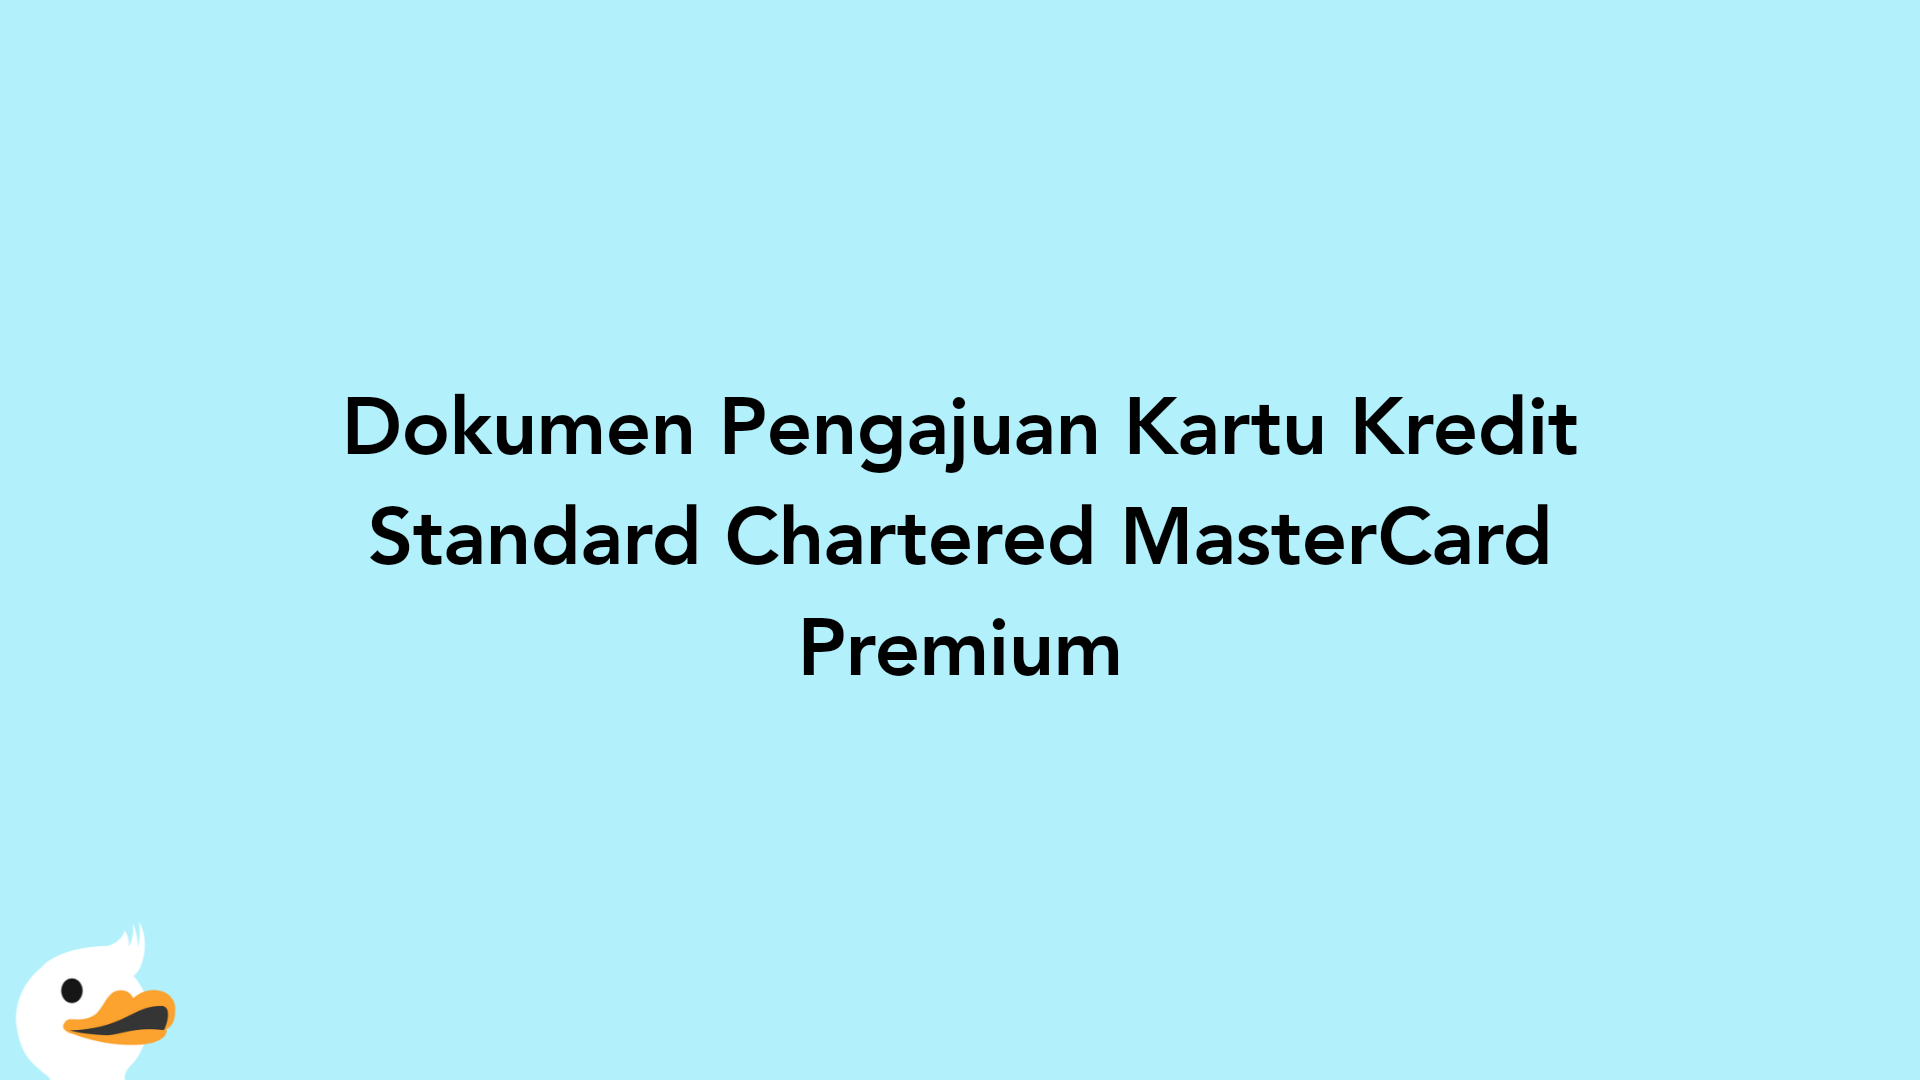 Dokumen Pengajuan Kartu Kredit Standard Chartered MasterCard Premium